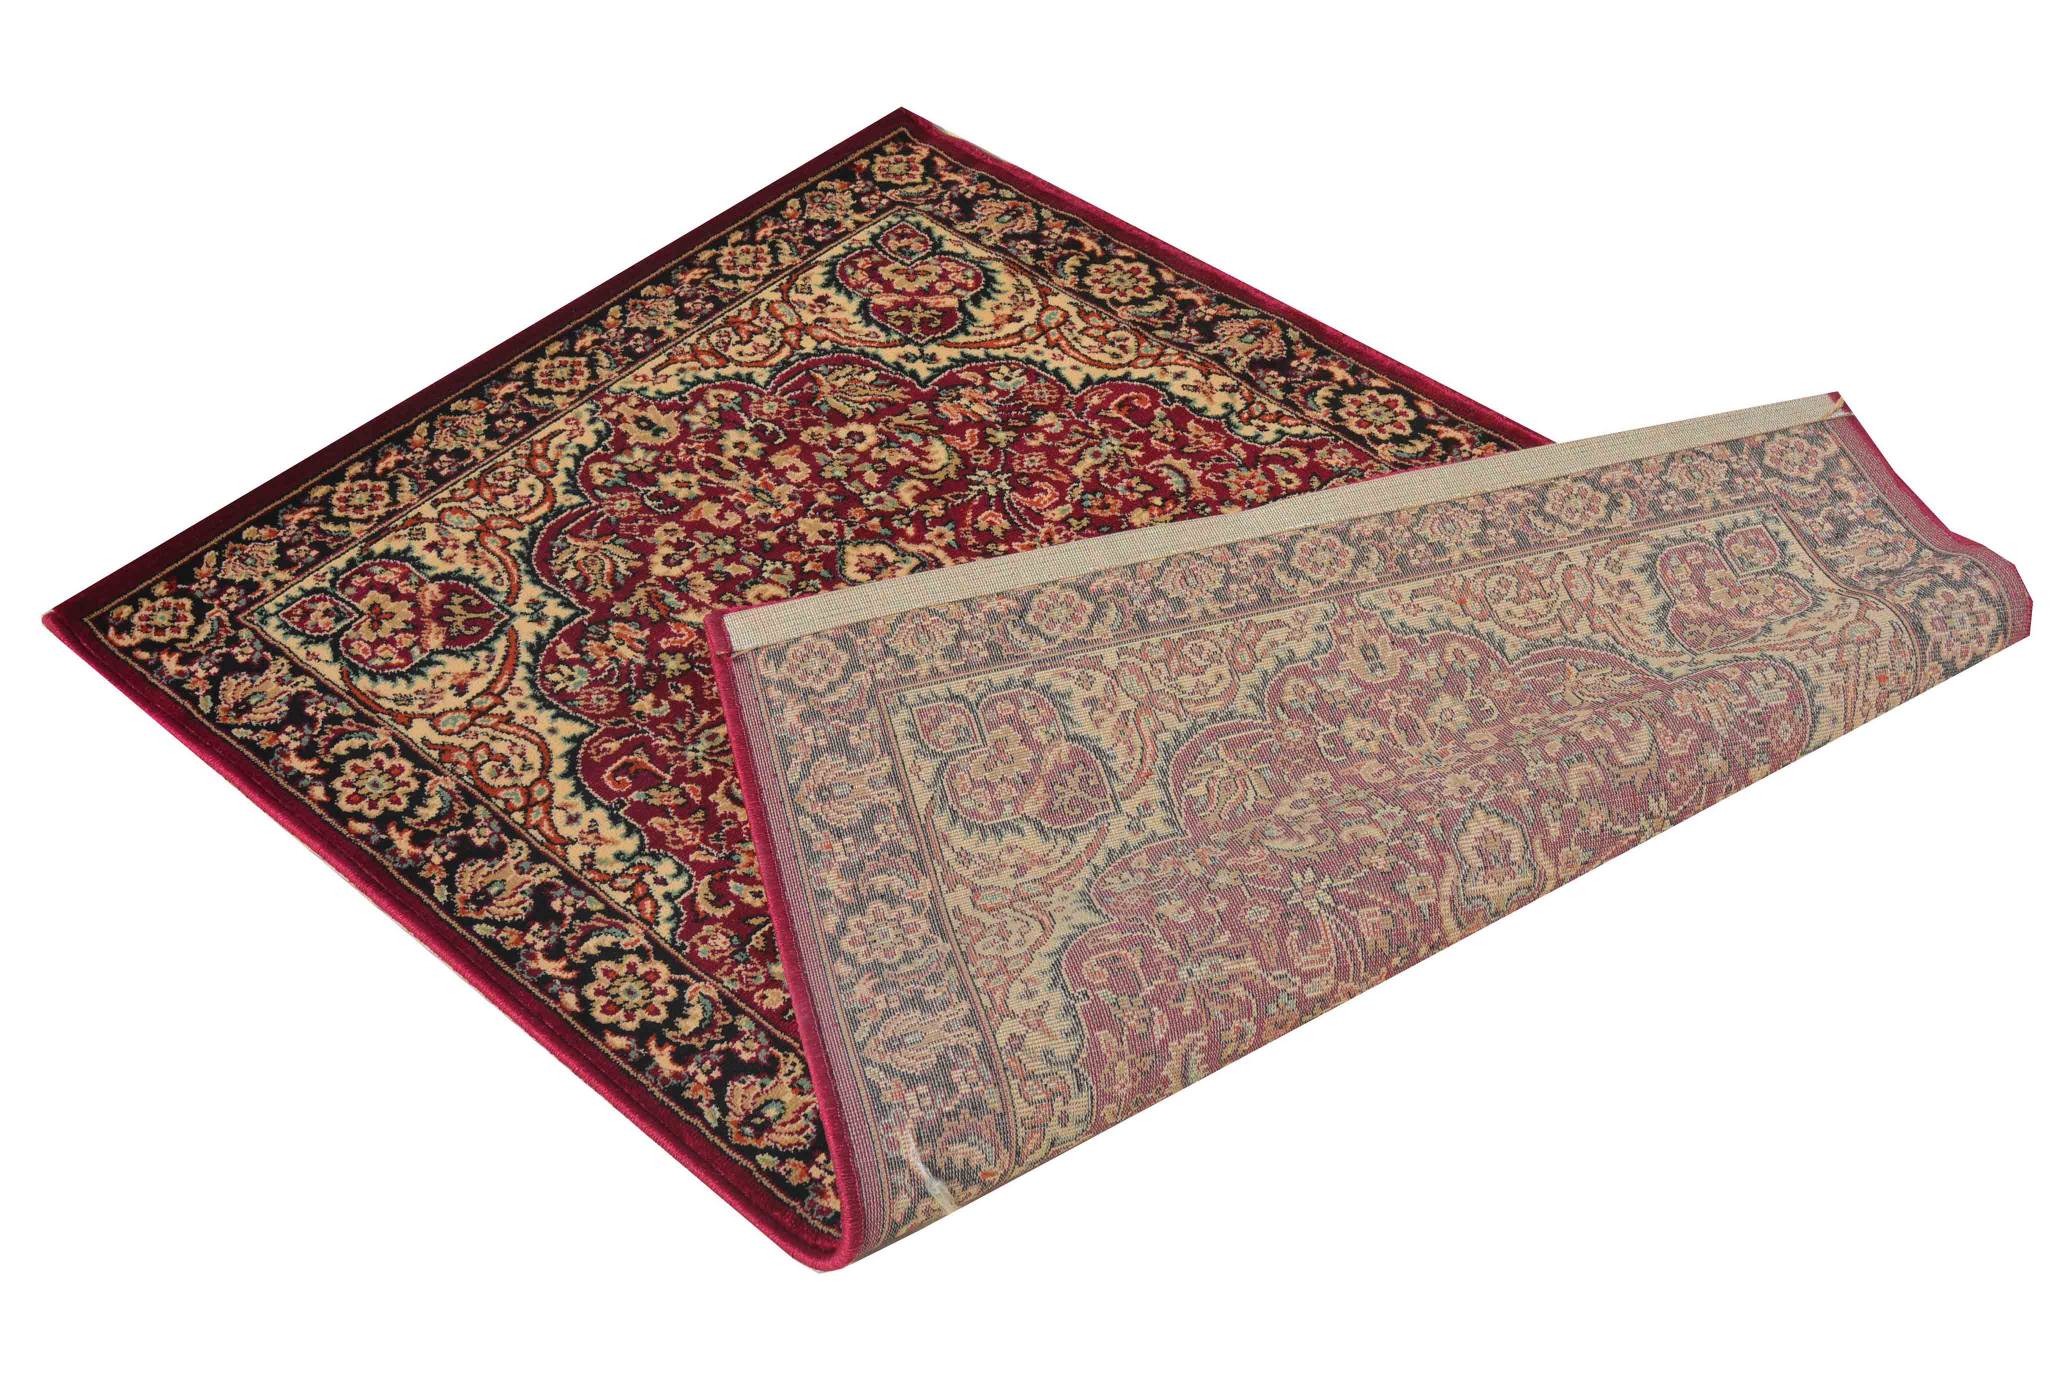 Detec™ Presto polypropylene Traditional Persian Ethnic Carpet